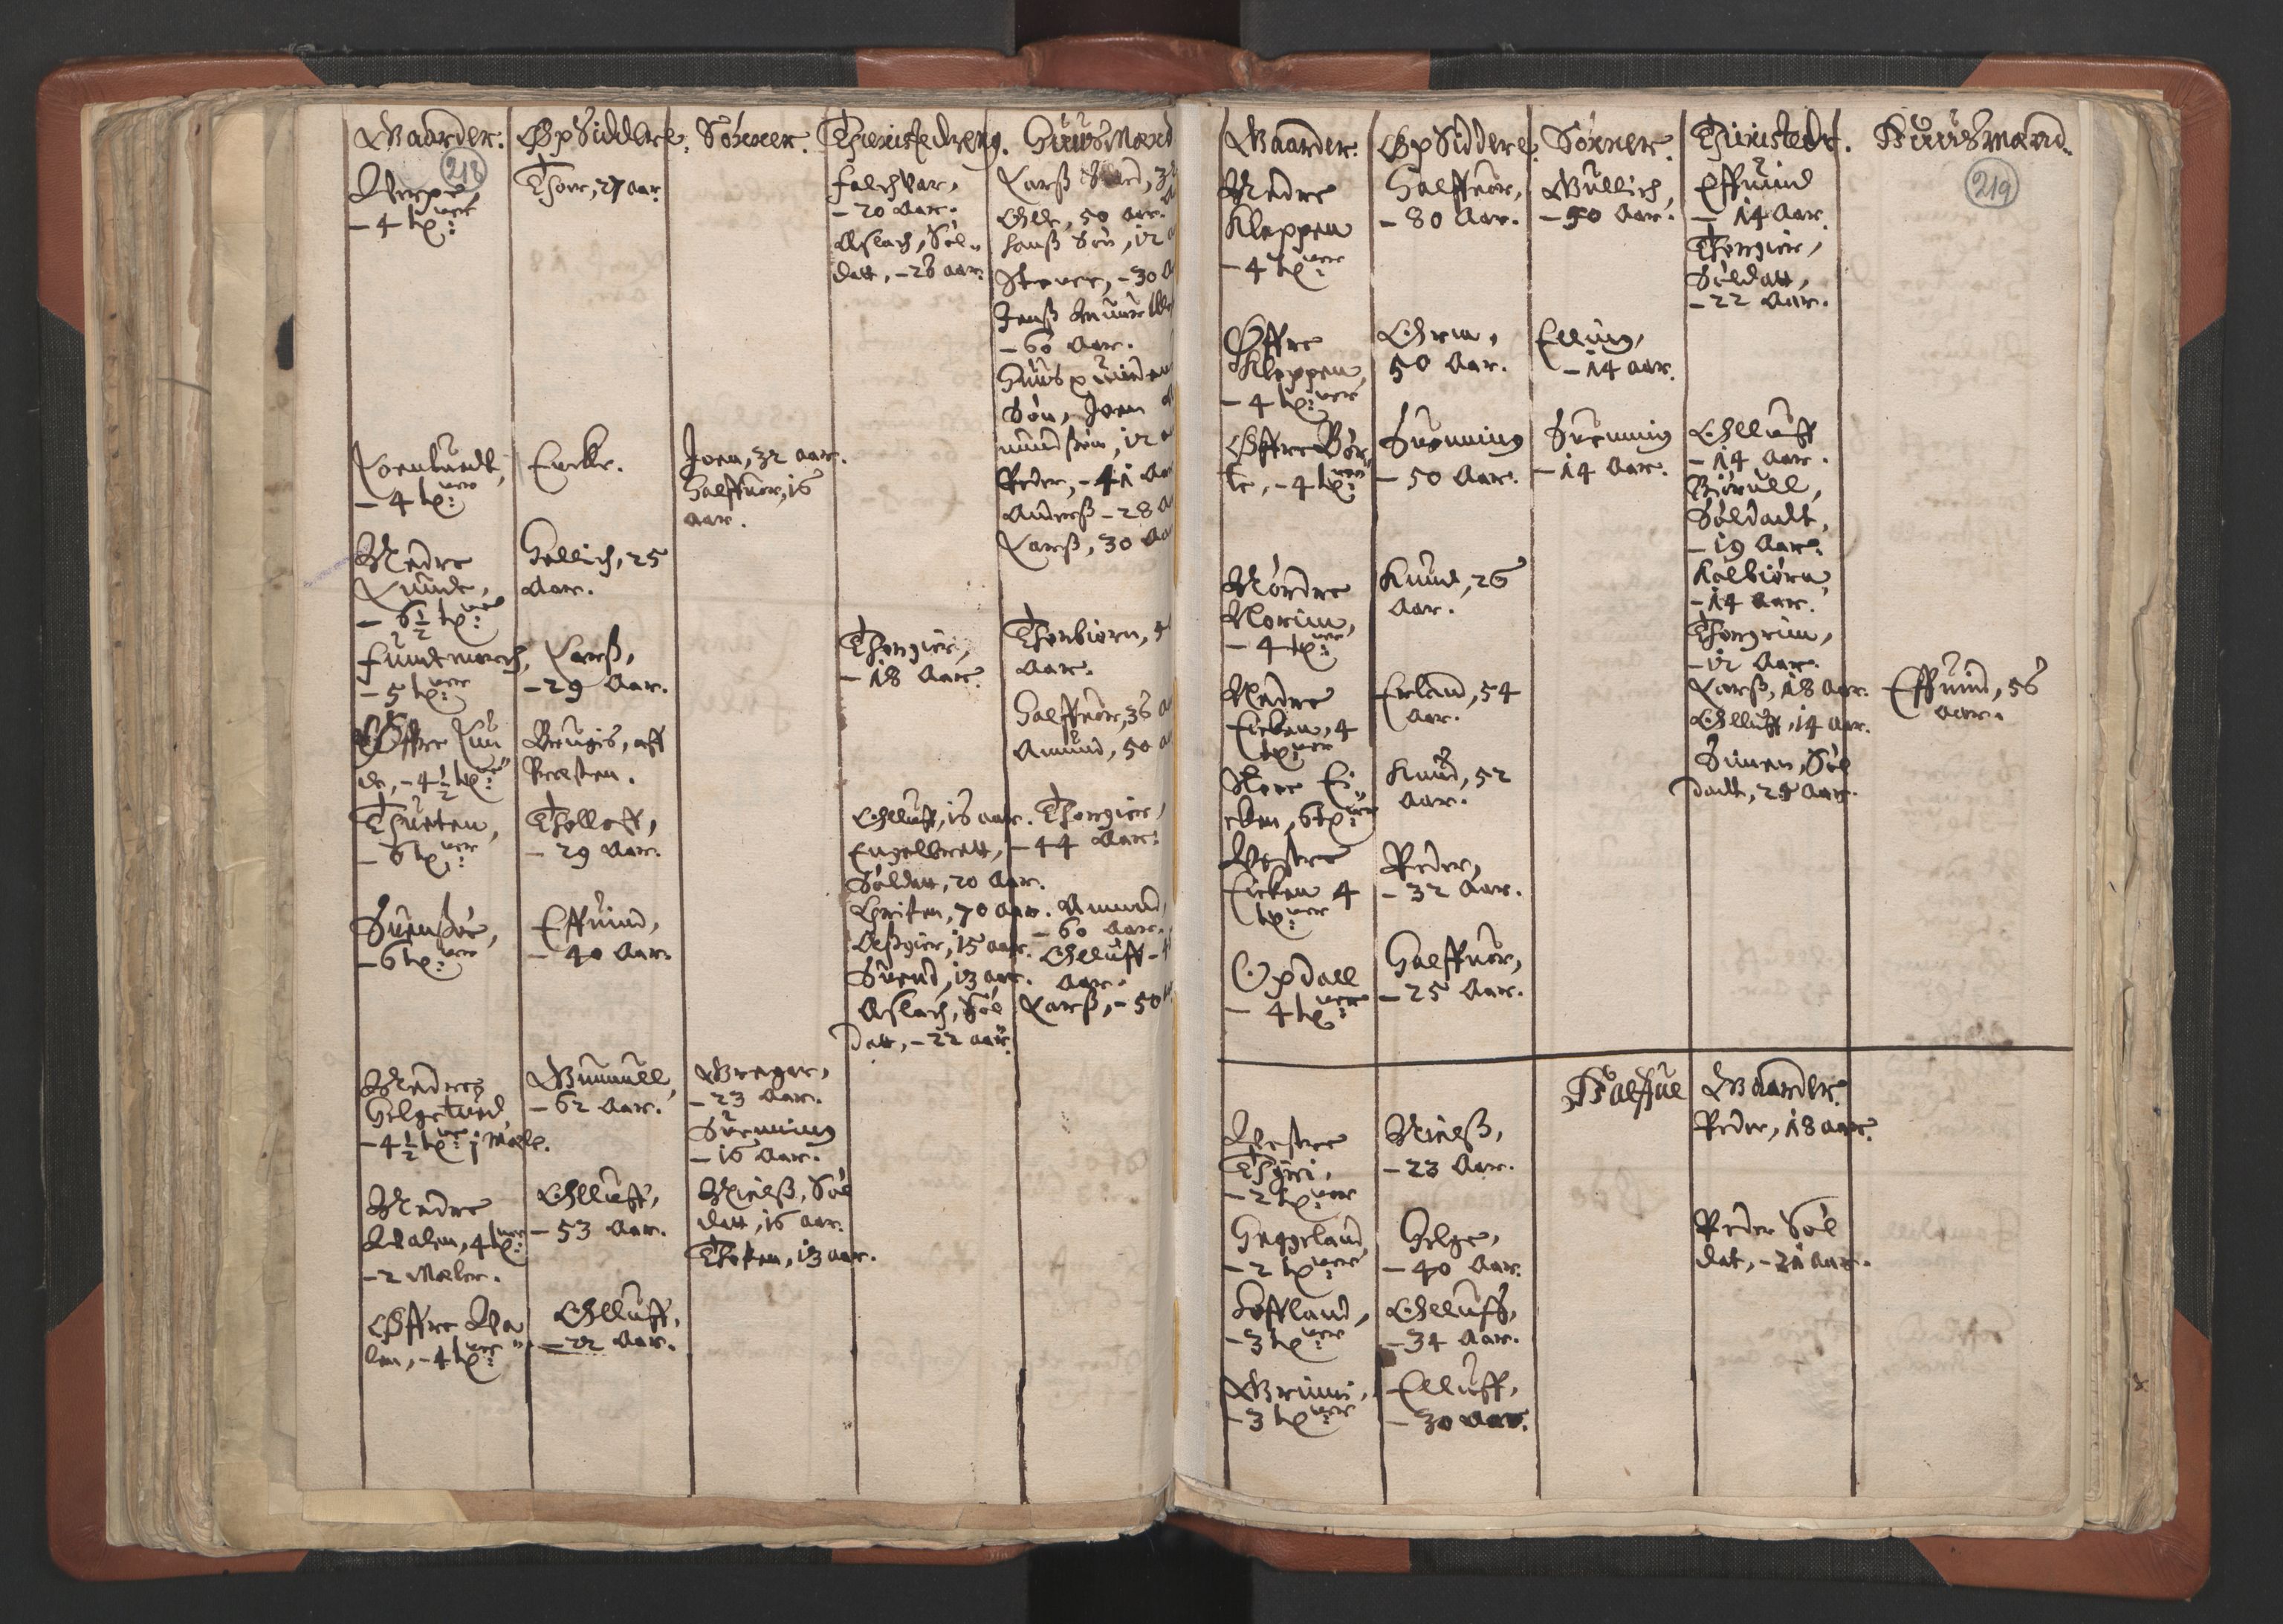 RA, Vicar's Census 1664-1666, no. 12: Øvre Telemark deanery, Nedre Telemark deanery and Bamble deanery, 1664-1666, p. 218-219